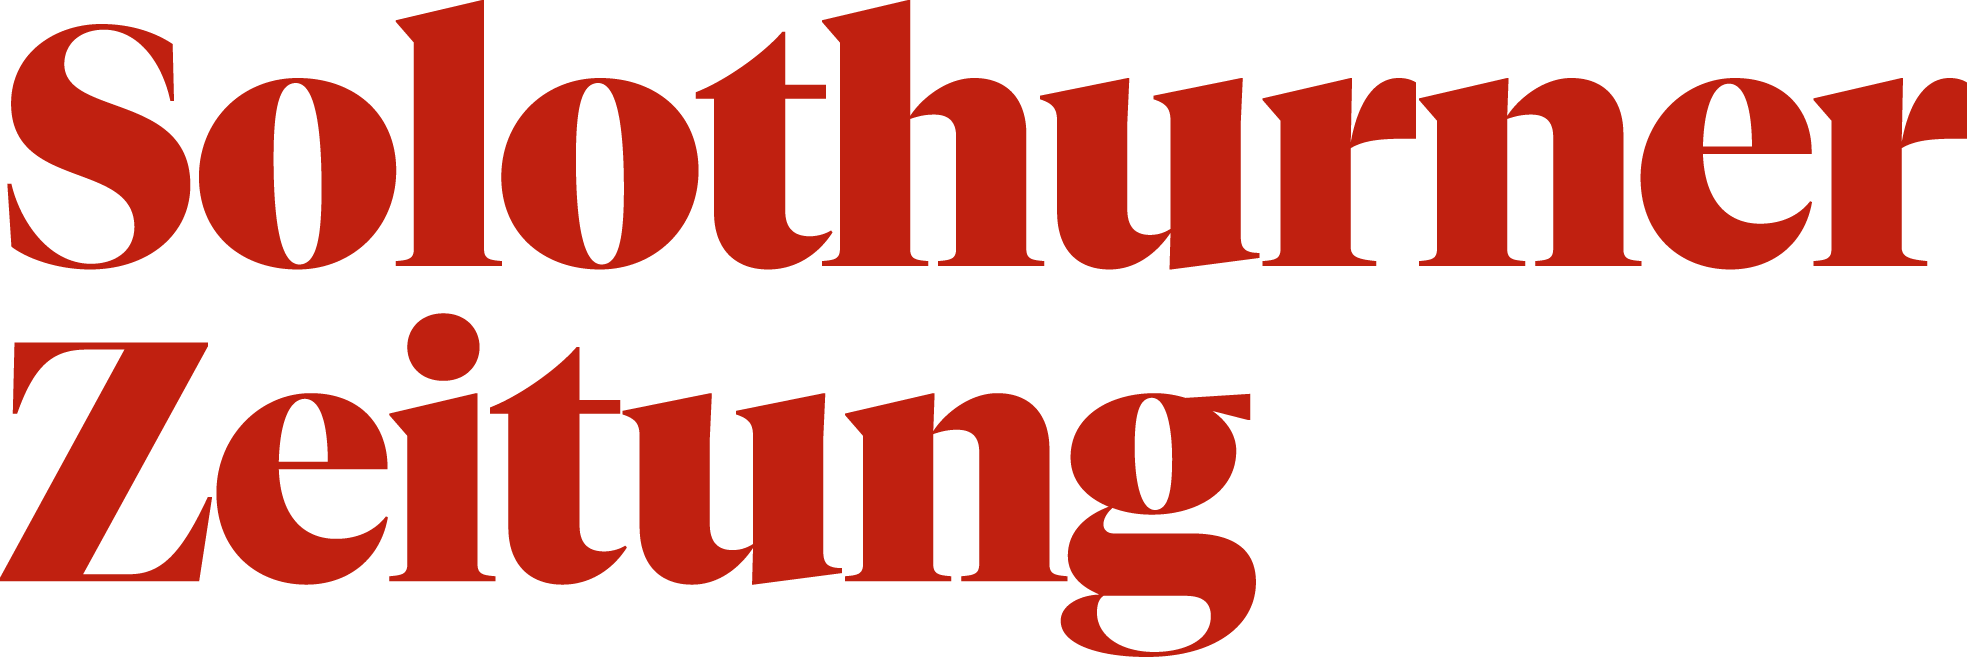 Solothurner_Zeitung RGB